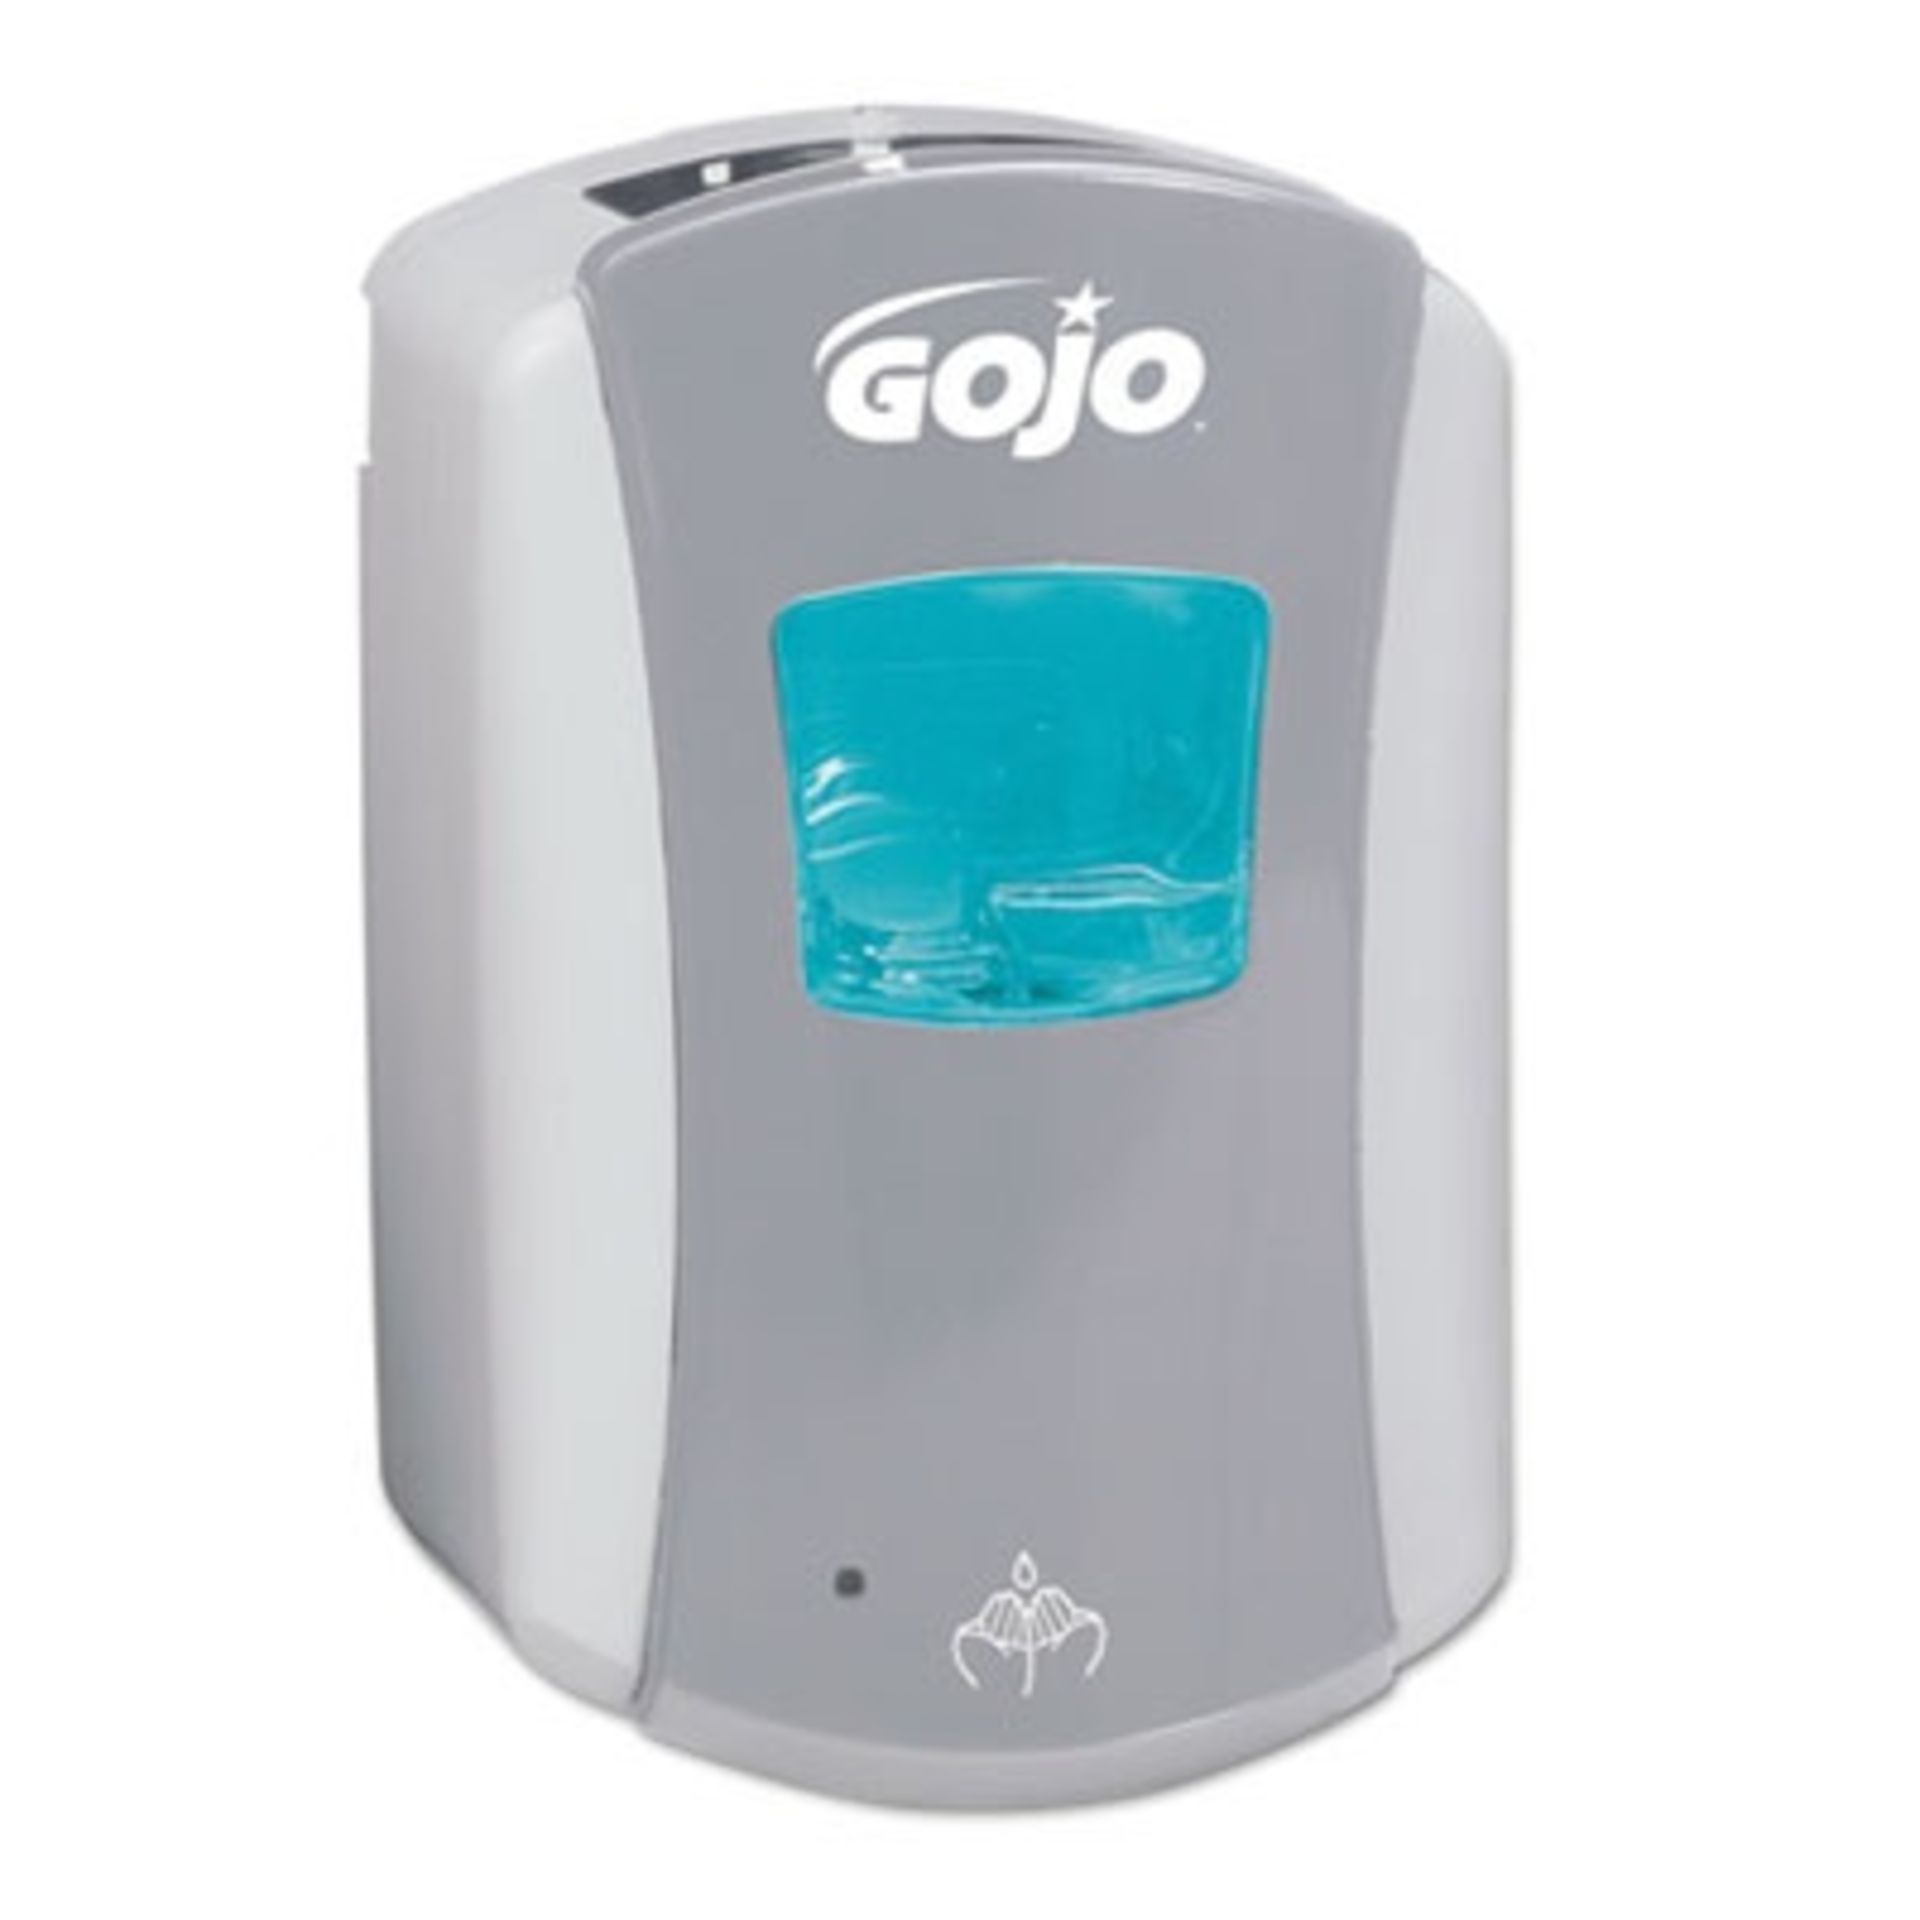 V Brand New Gojo LTX Dispenser Grey/White For 700ml Cartridge eBay Price £12.89